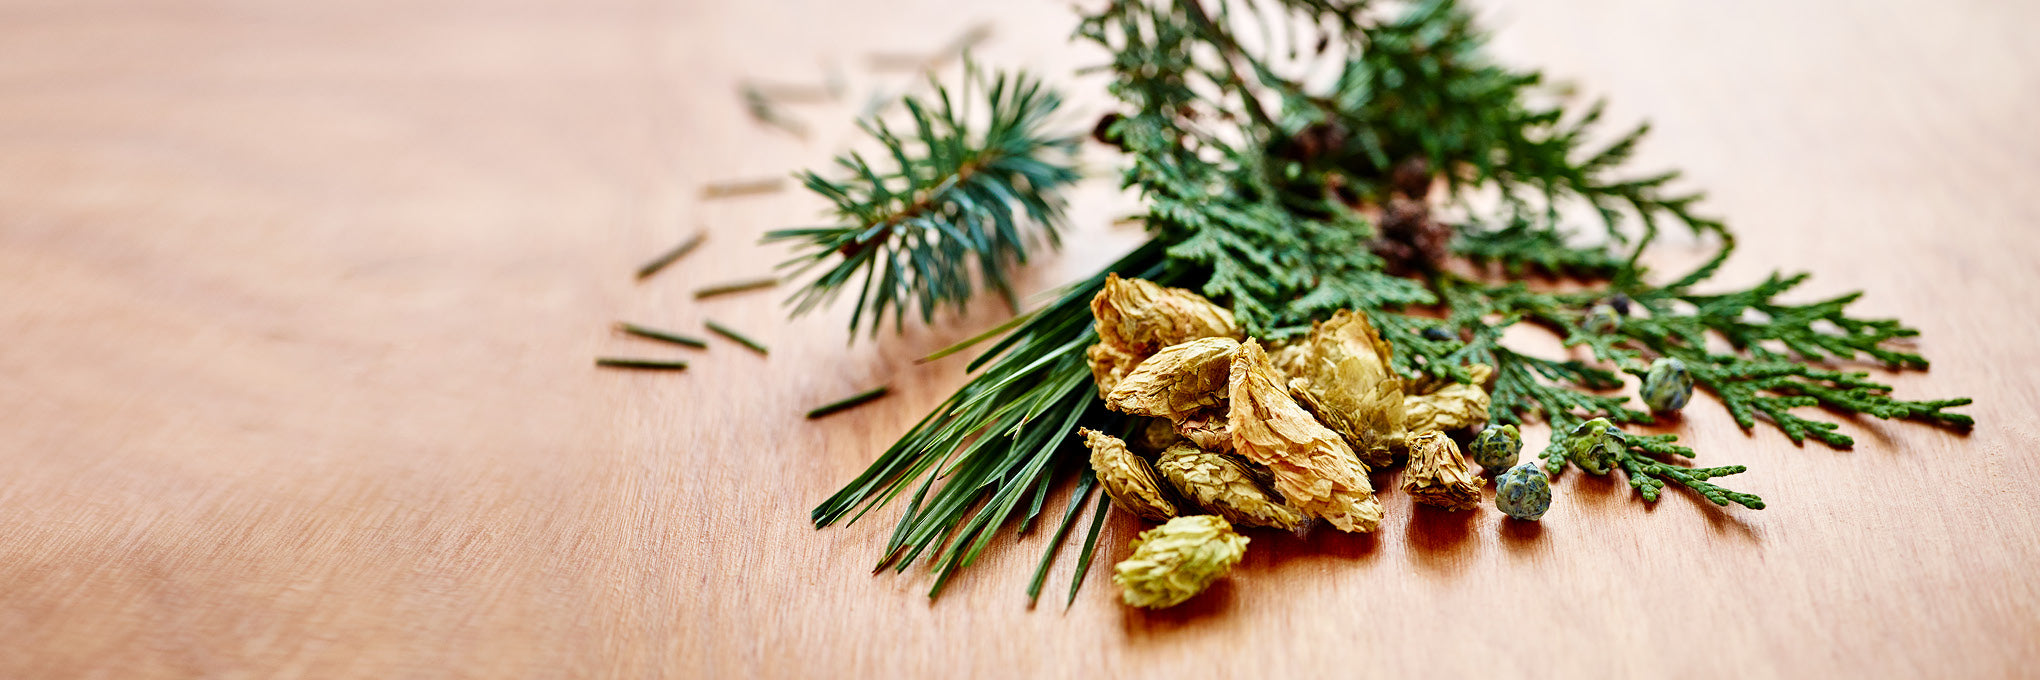 Featured terpenes: Woodsy aromas